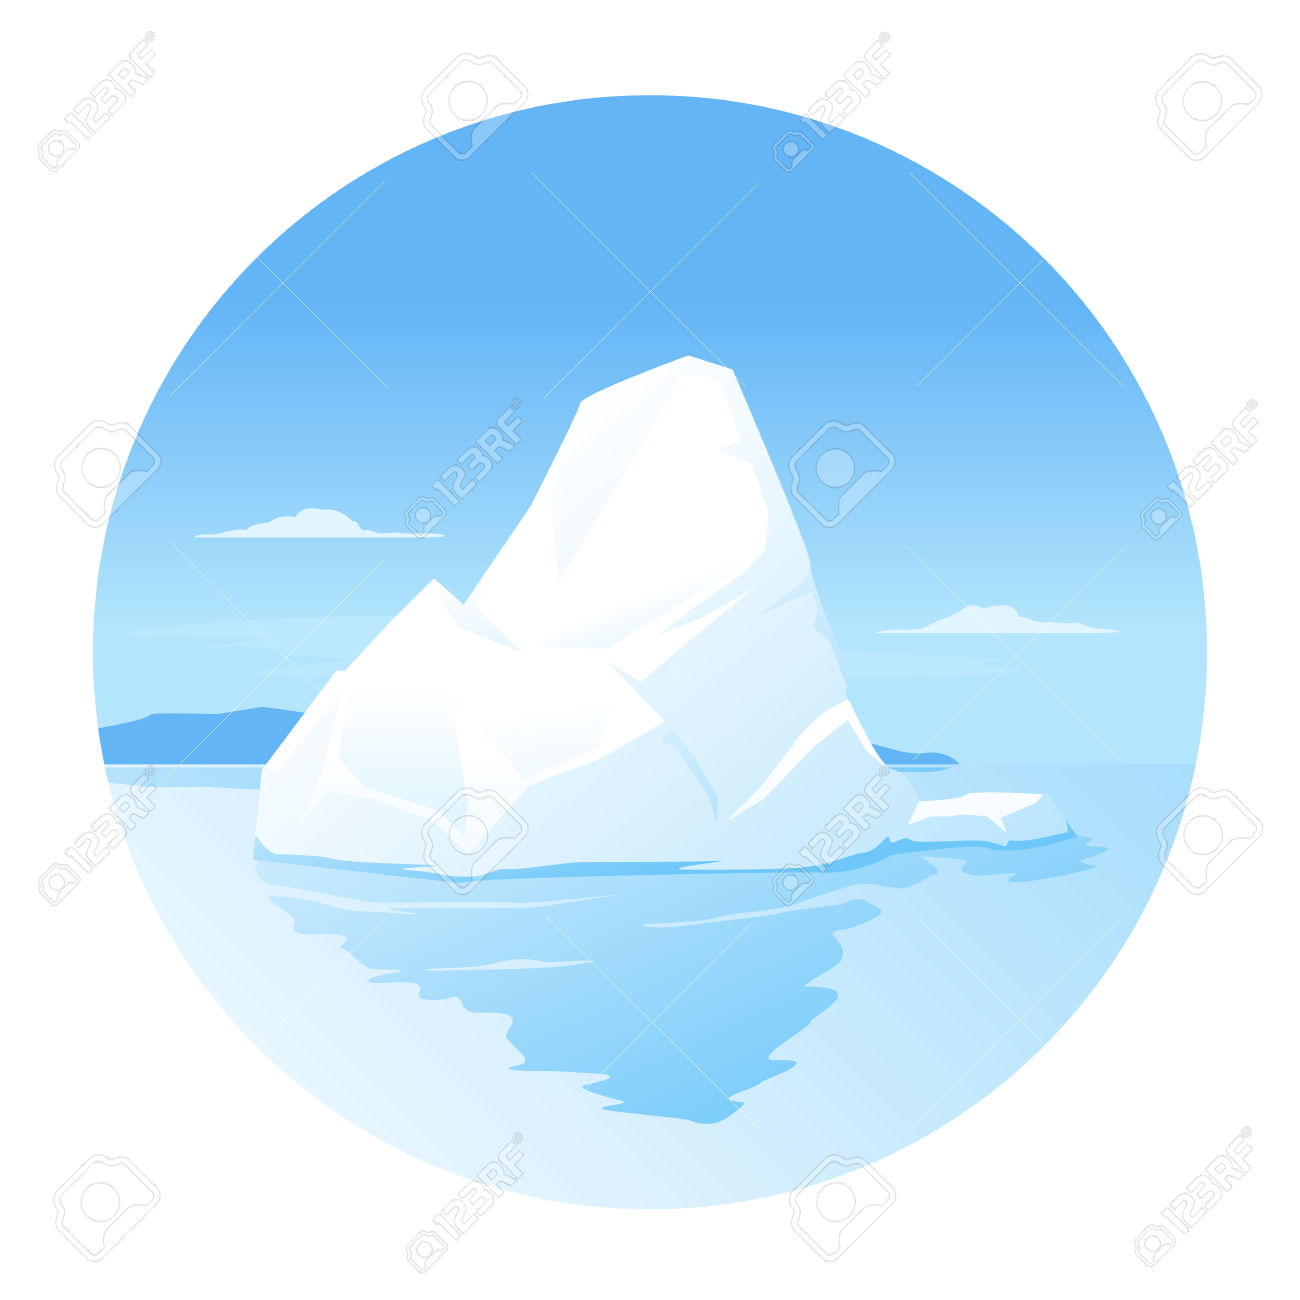 iceberg clipart cartoon